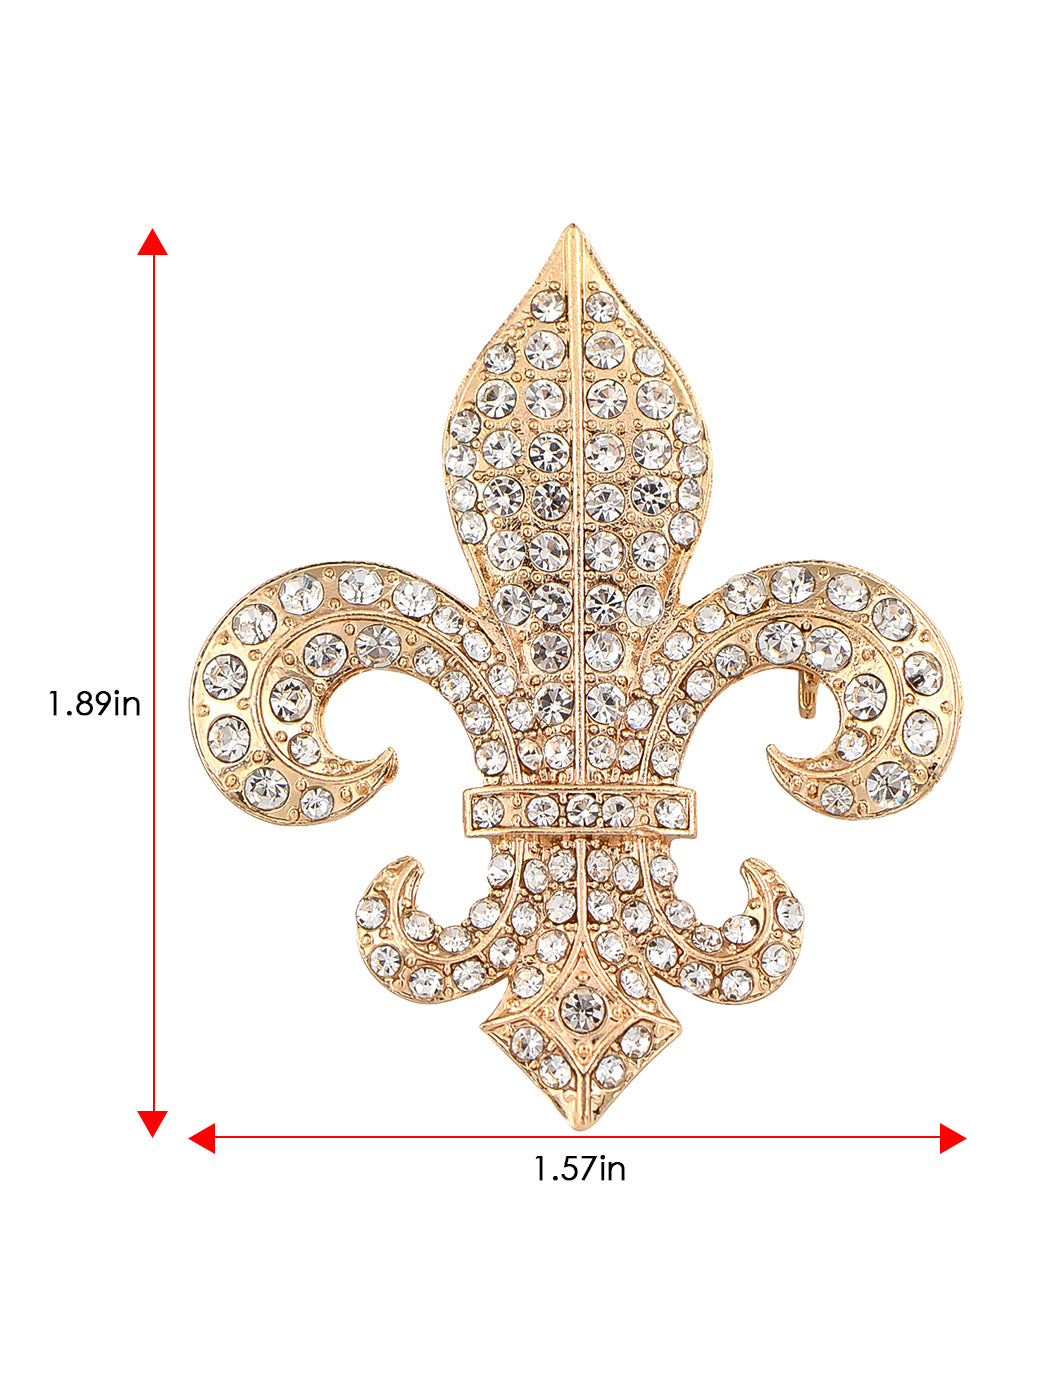 Alilang Golden Tone Sparkly Clear Crystal Rhinestones Royal Fleur De Lis Lily Brooch Pin